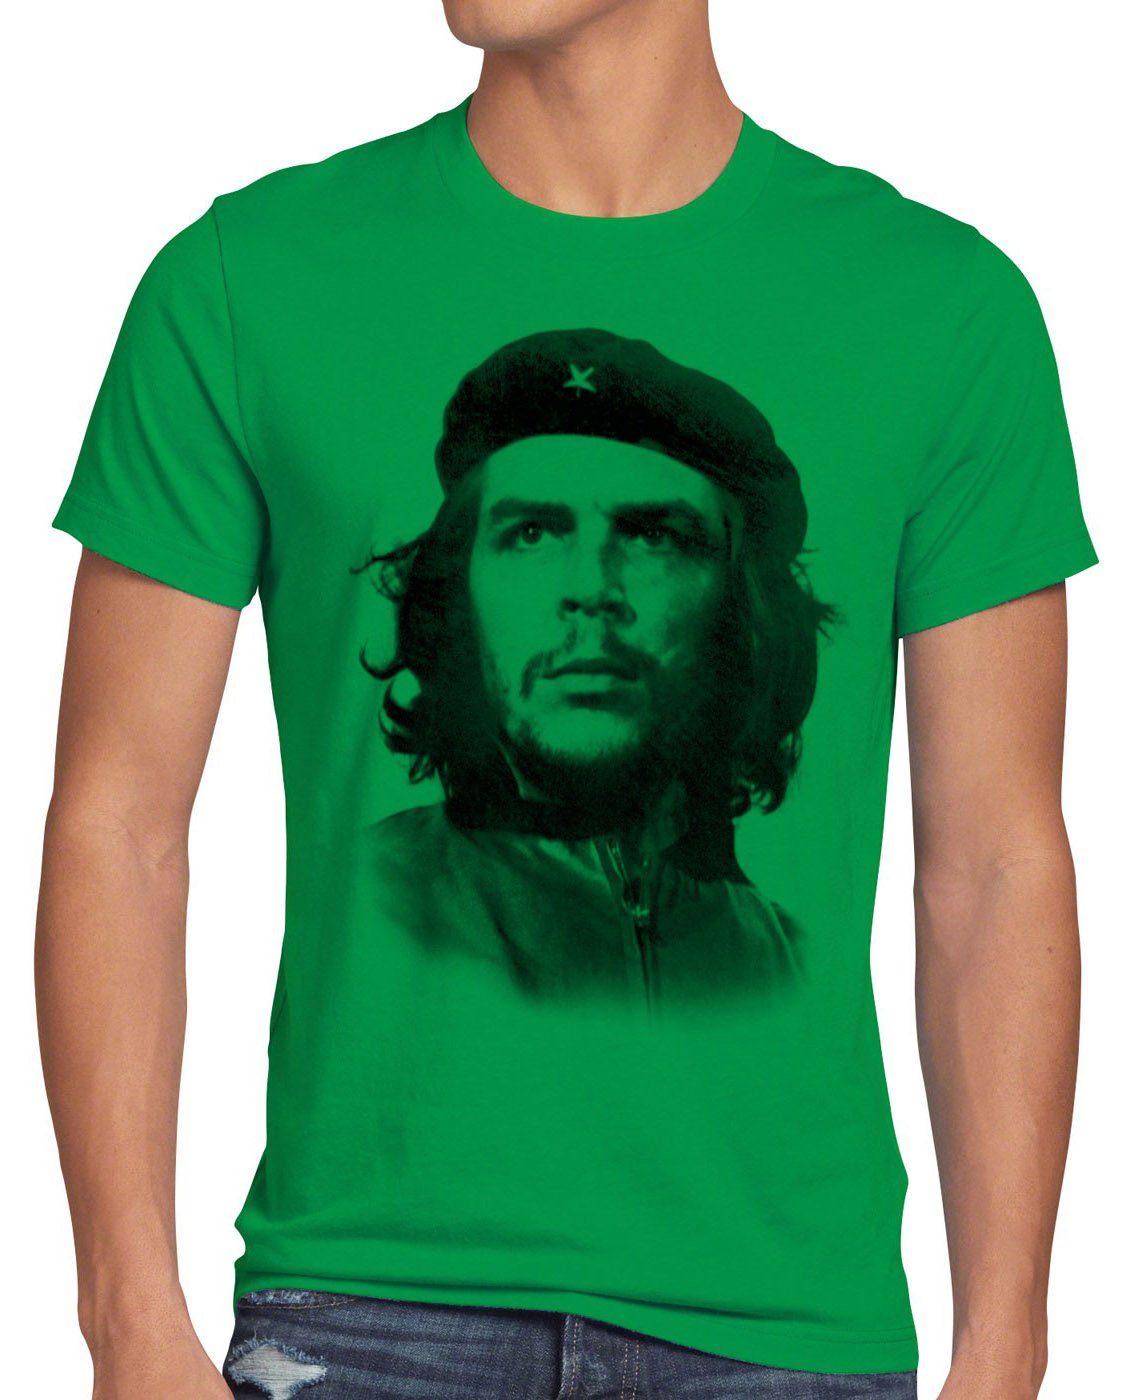 revolution Foto CHE Kommunismus grün Guevara kuba castro style3 T-Shirt cuba Print-Shirt Havana Herren